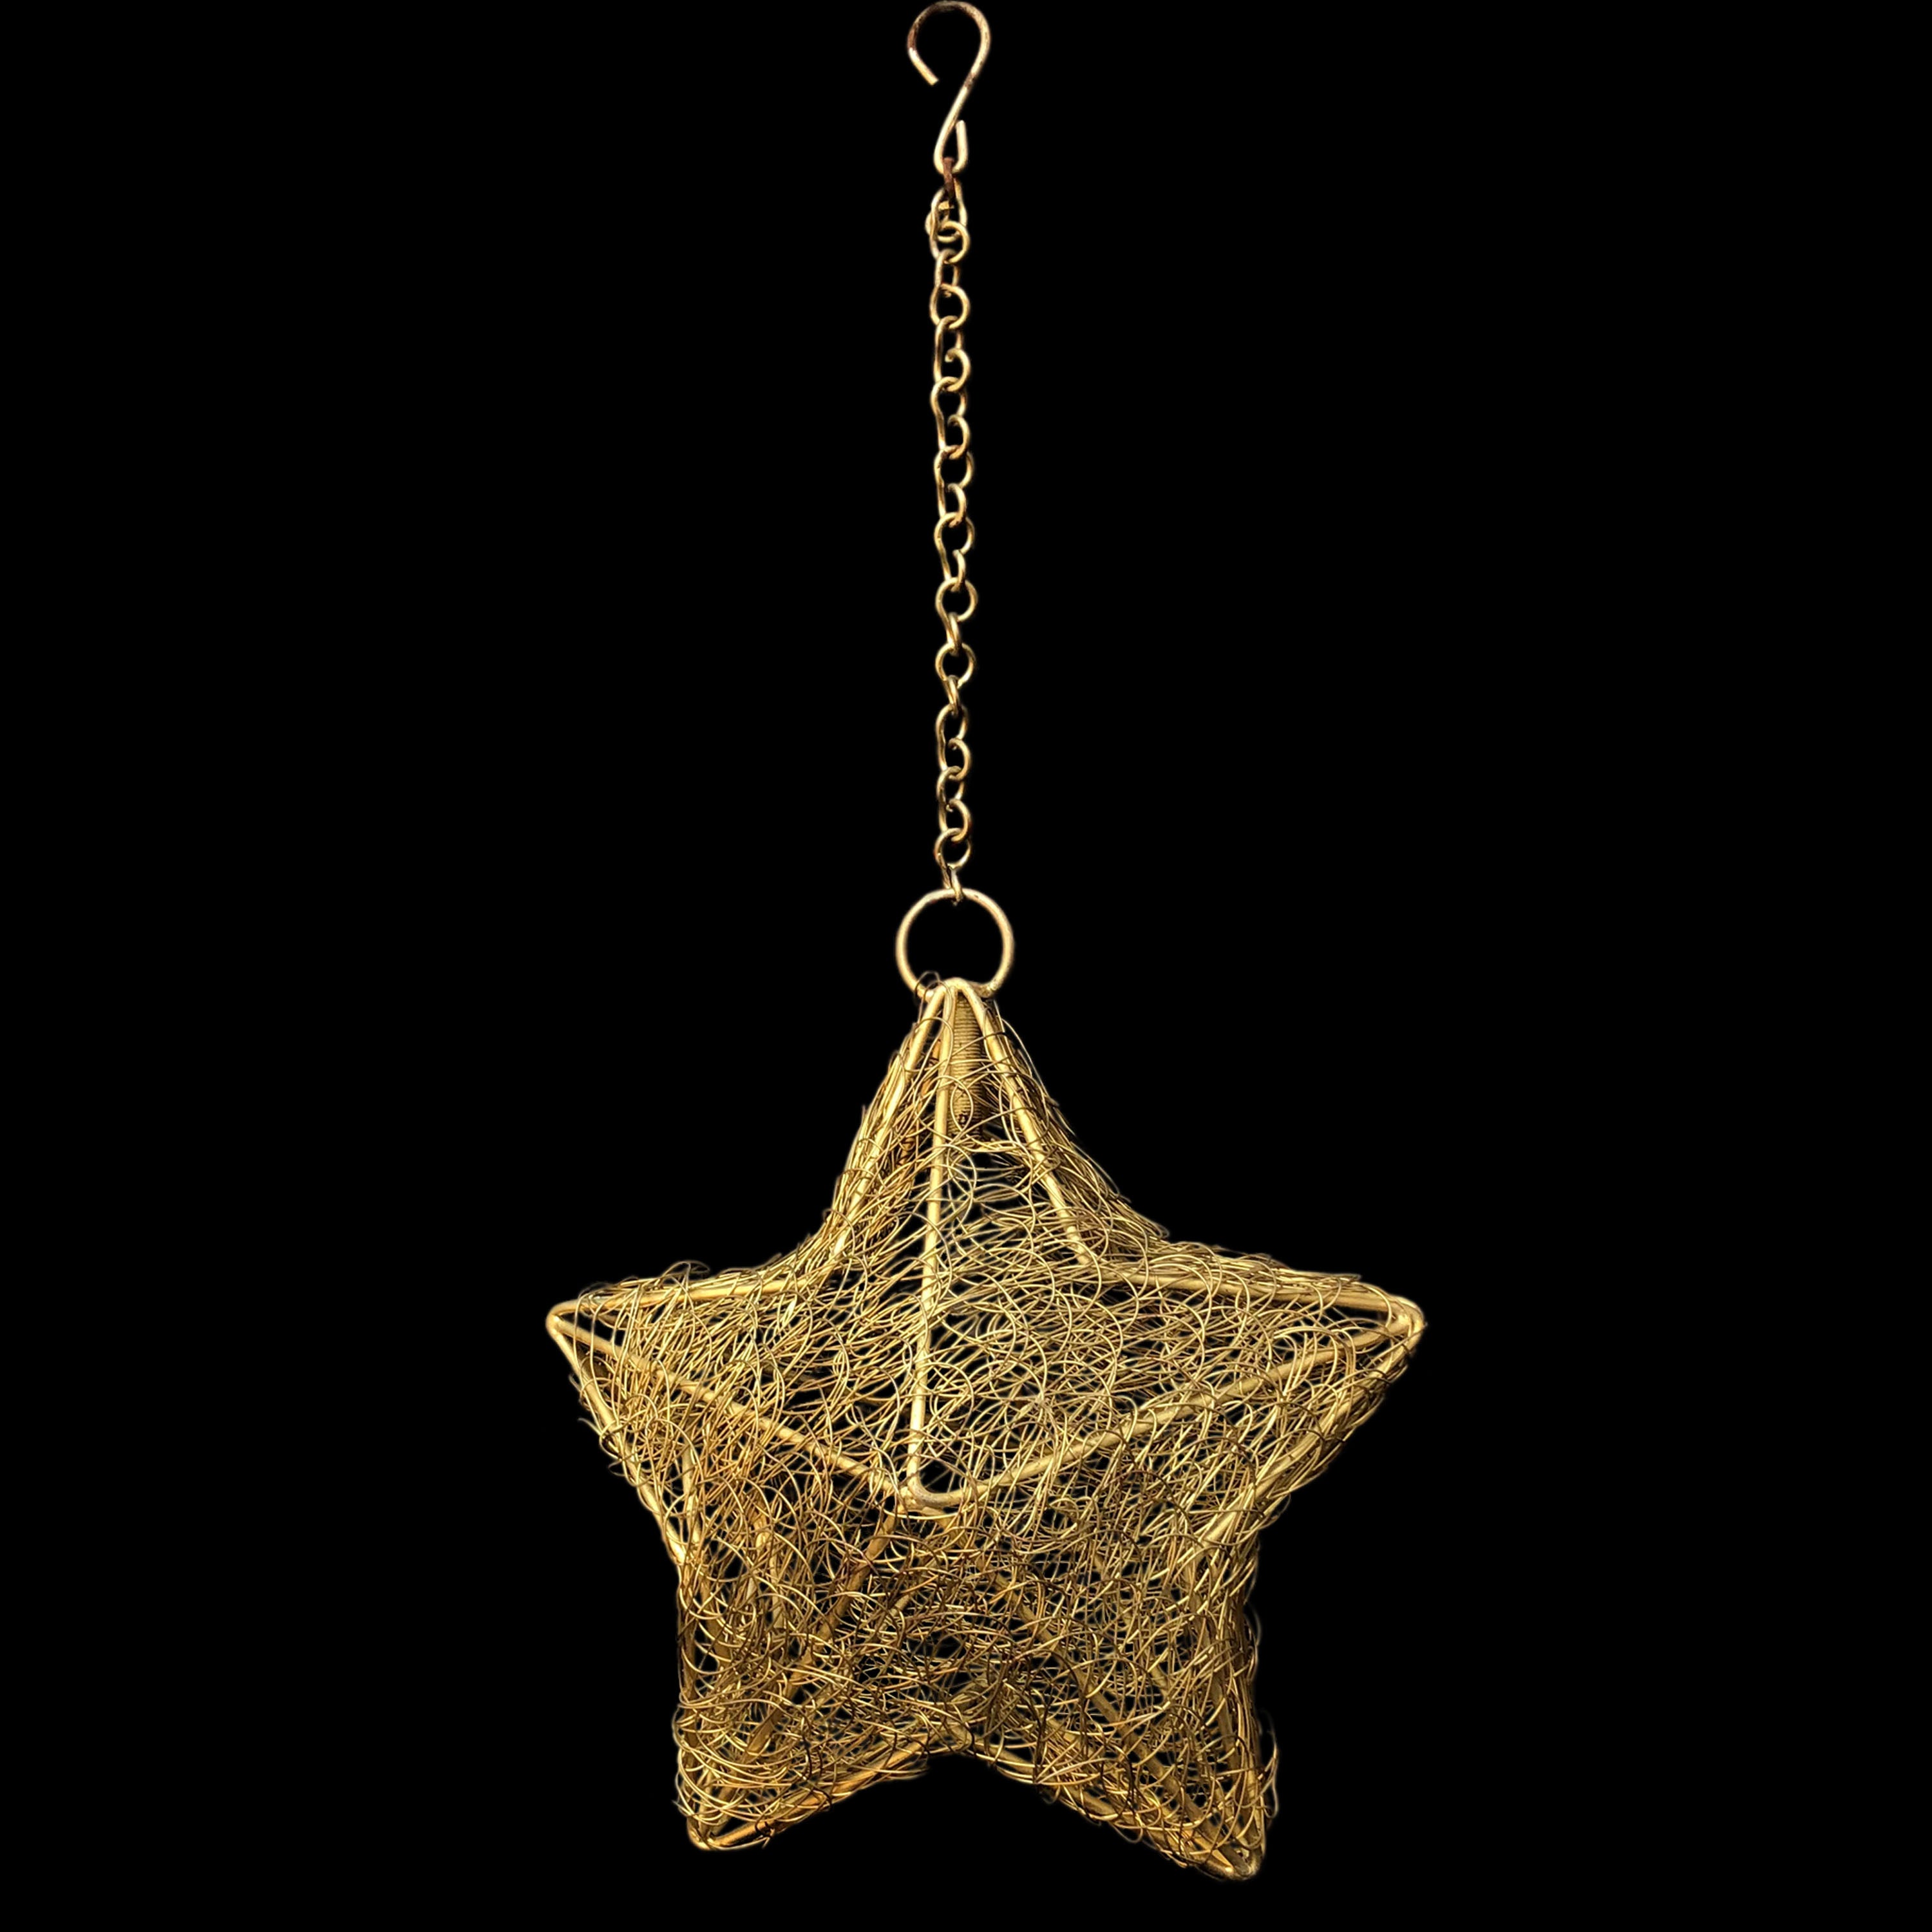 Star Candel Hanging Lamp